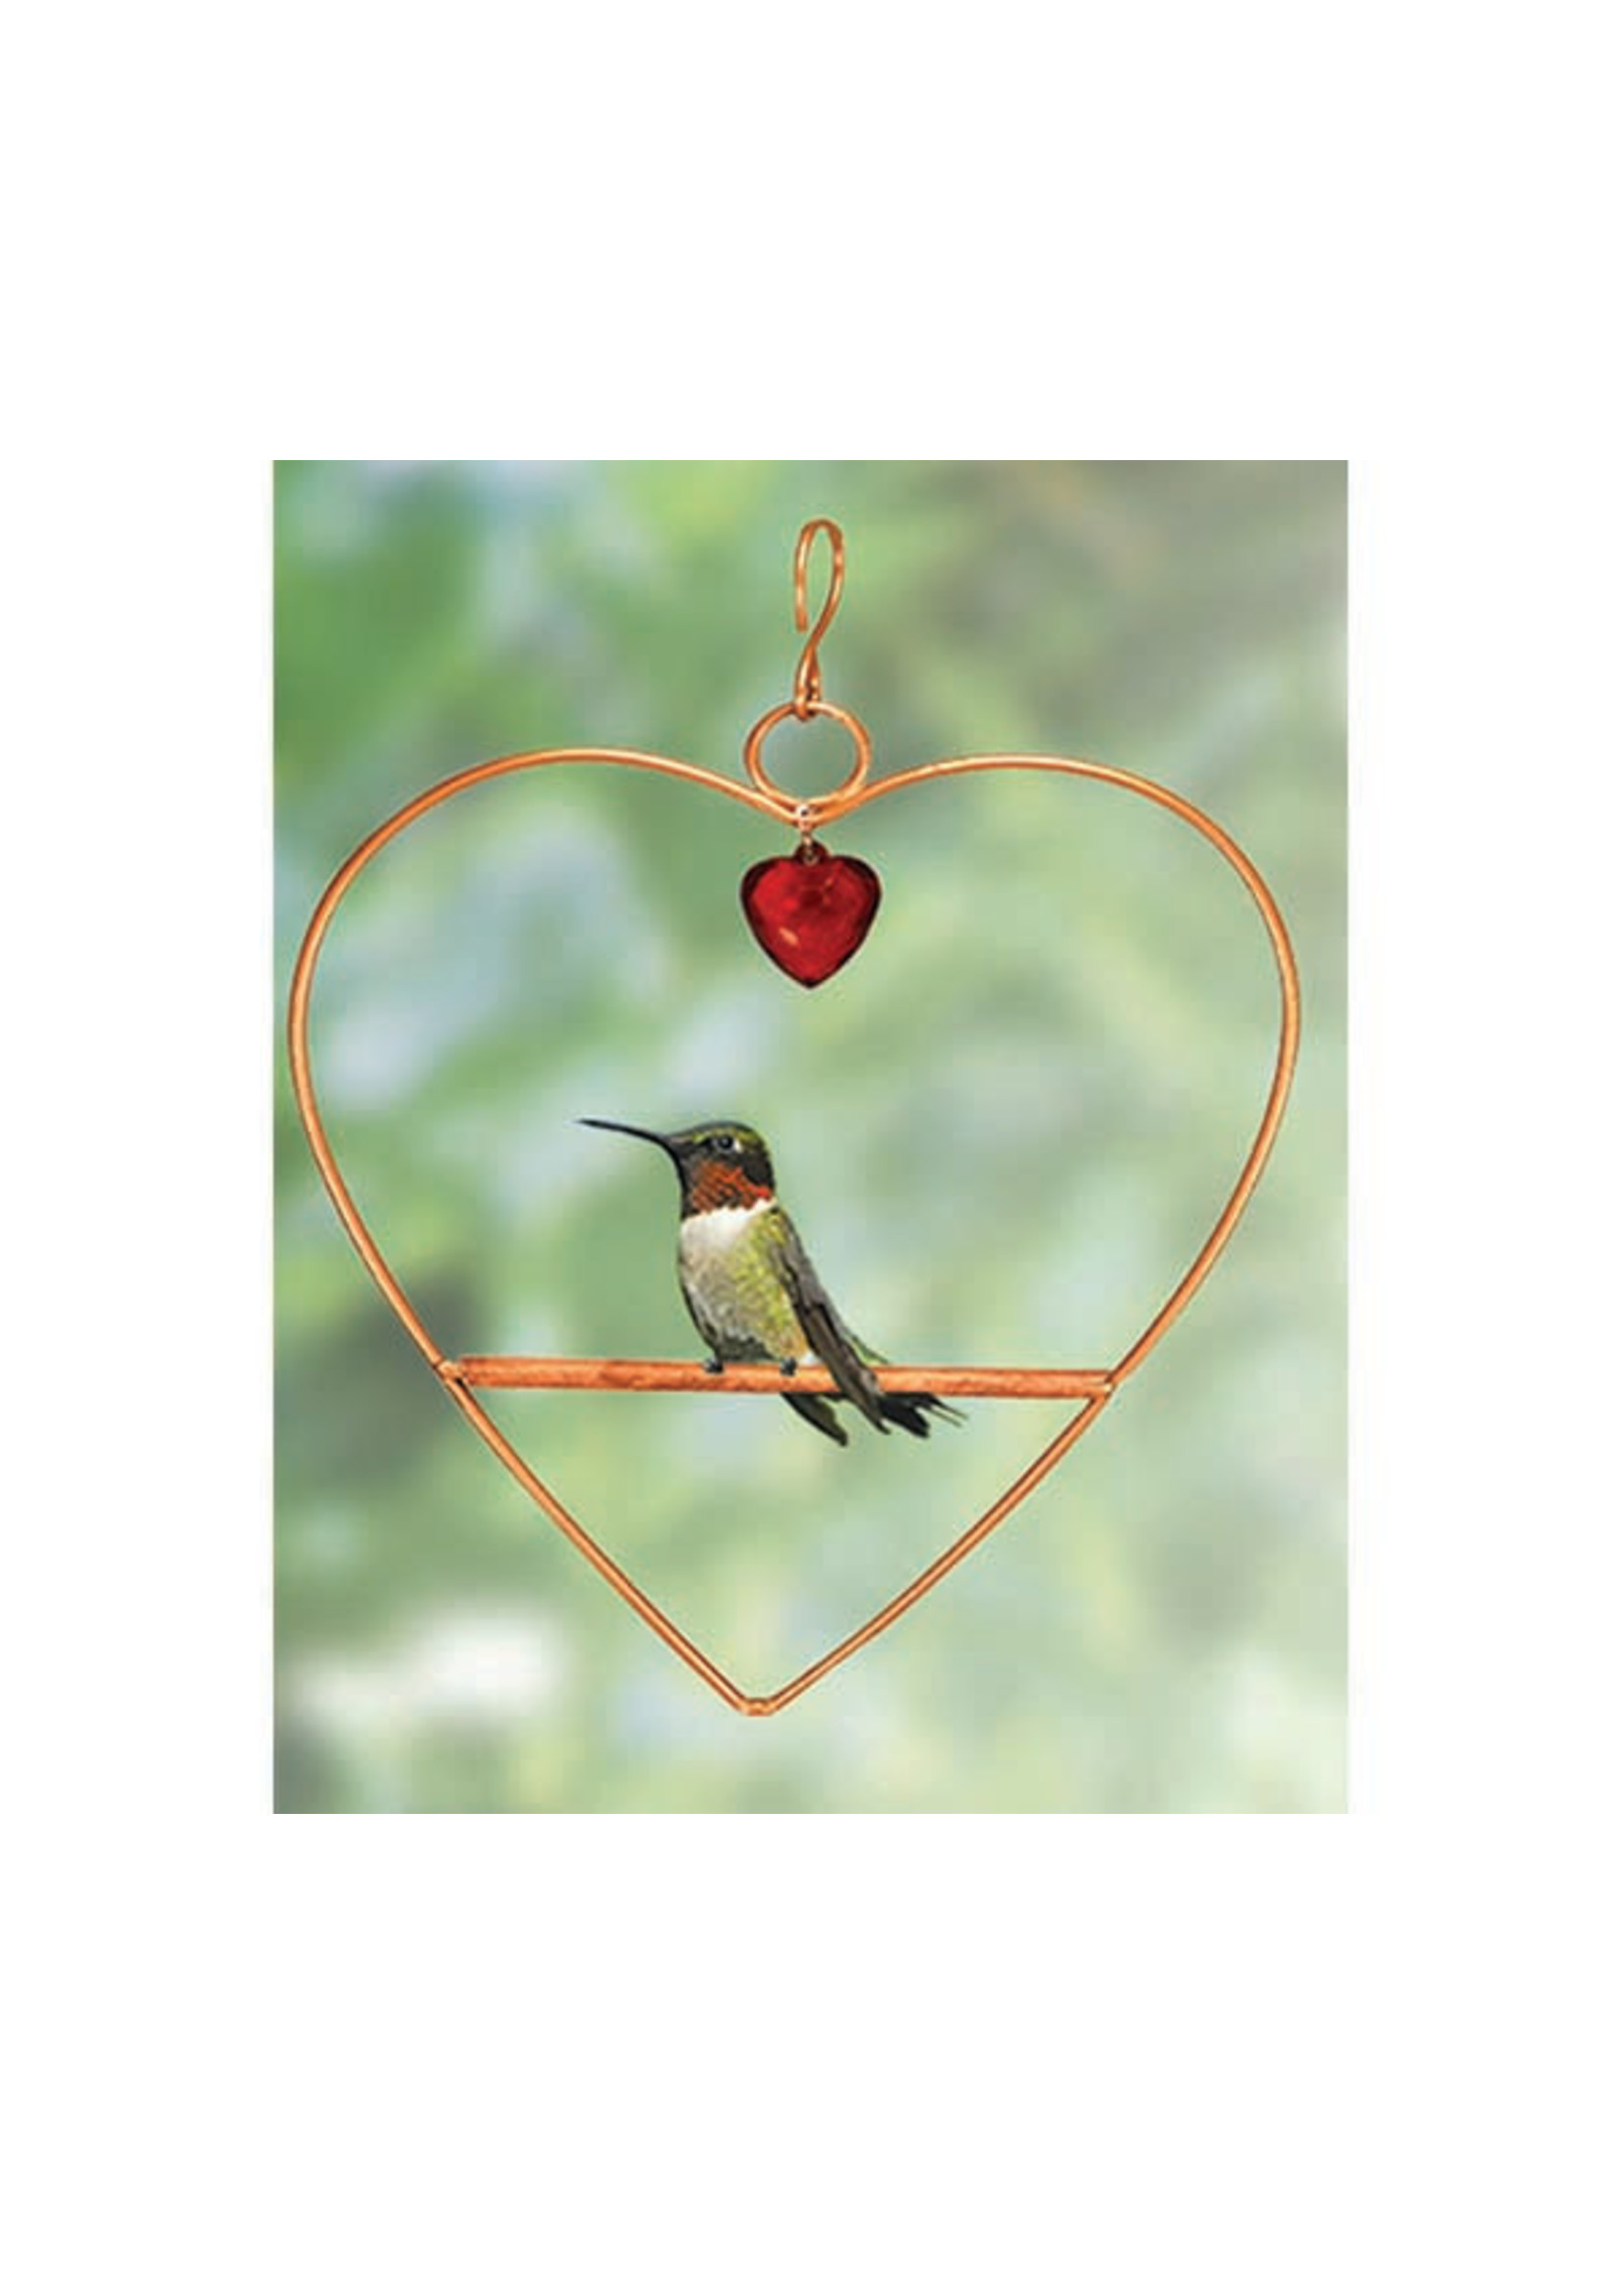 Songbird Essentials "Tweet Heart" Birdie Swing